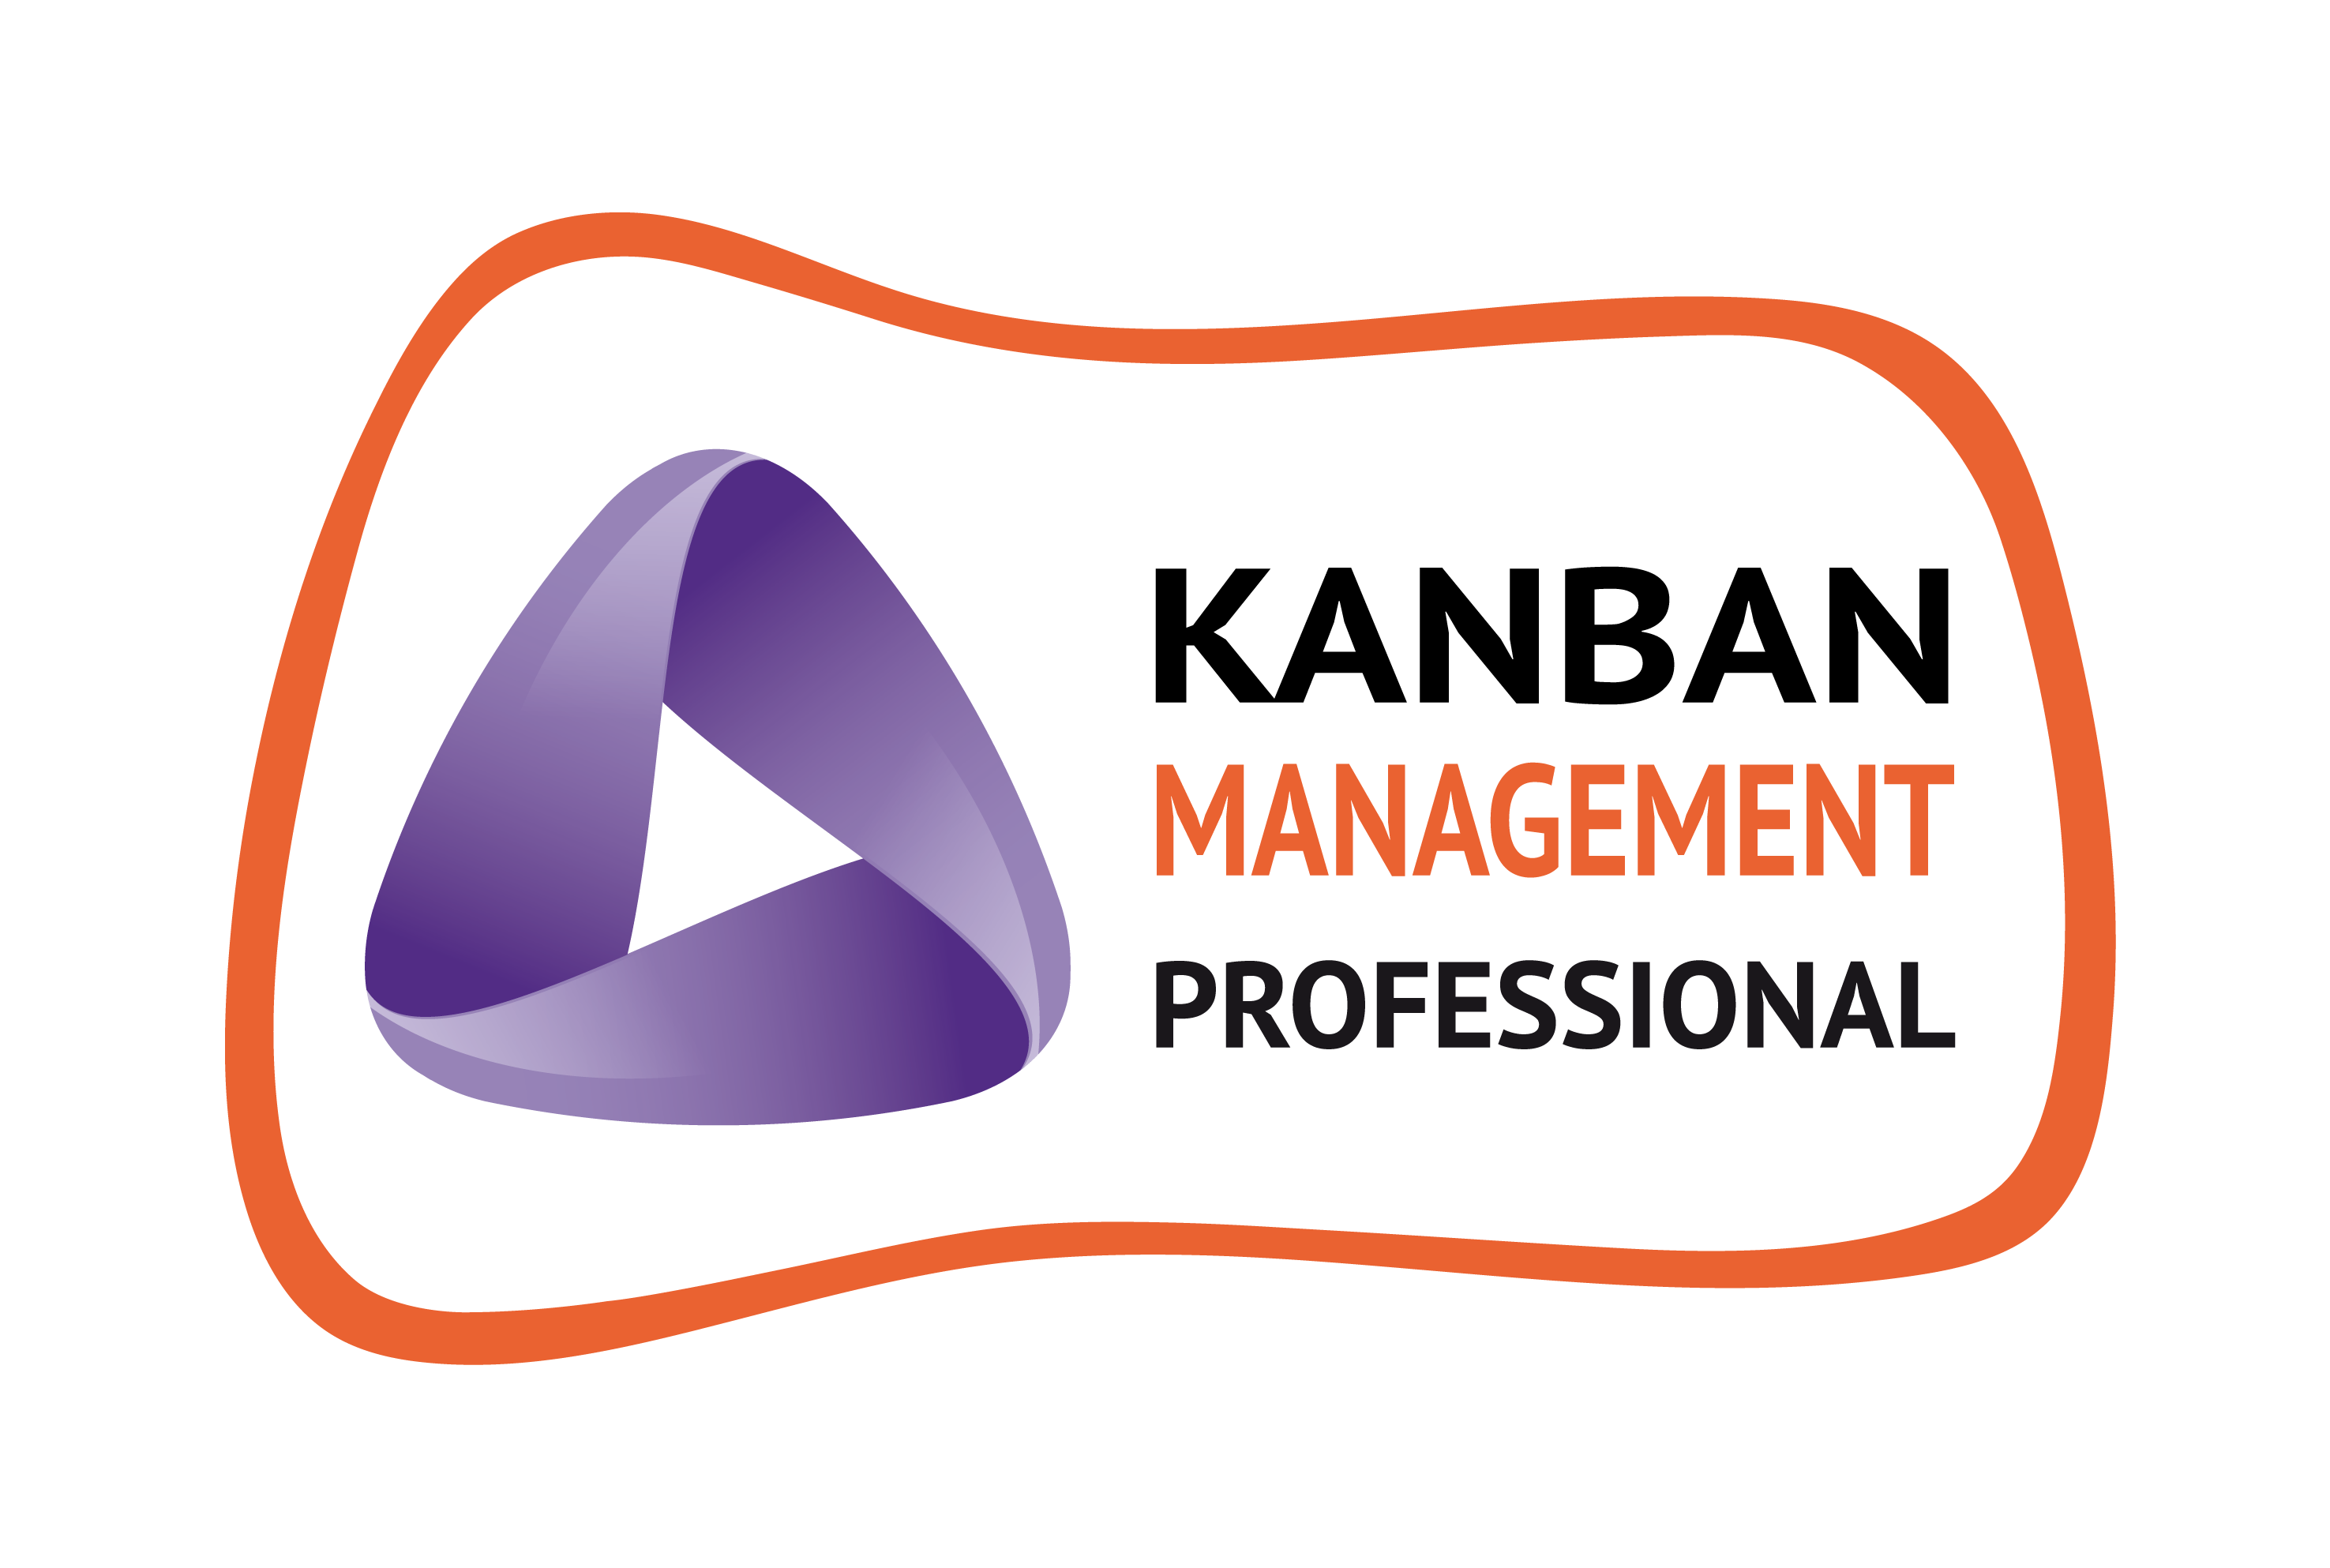 Kanban Management Professional Badge